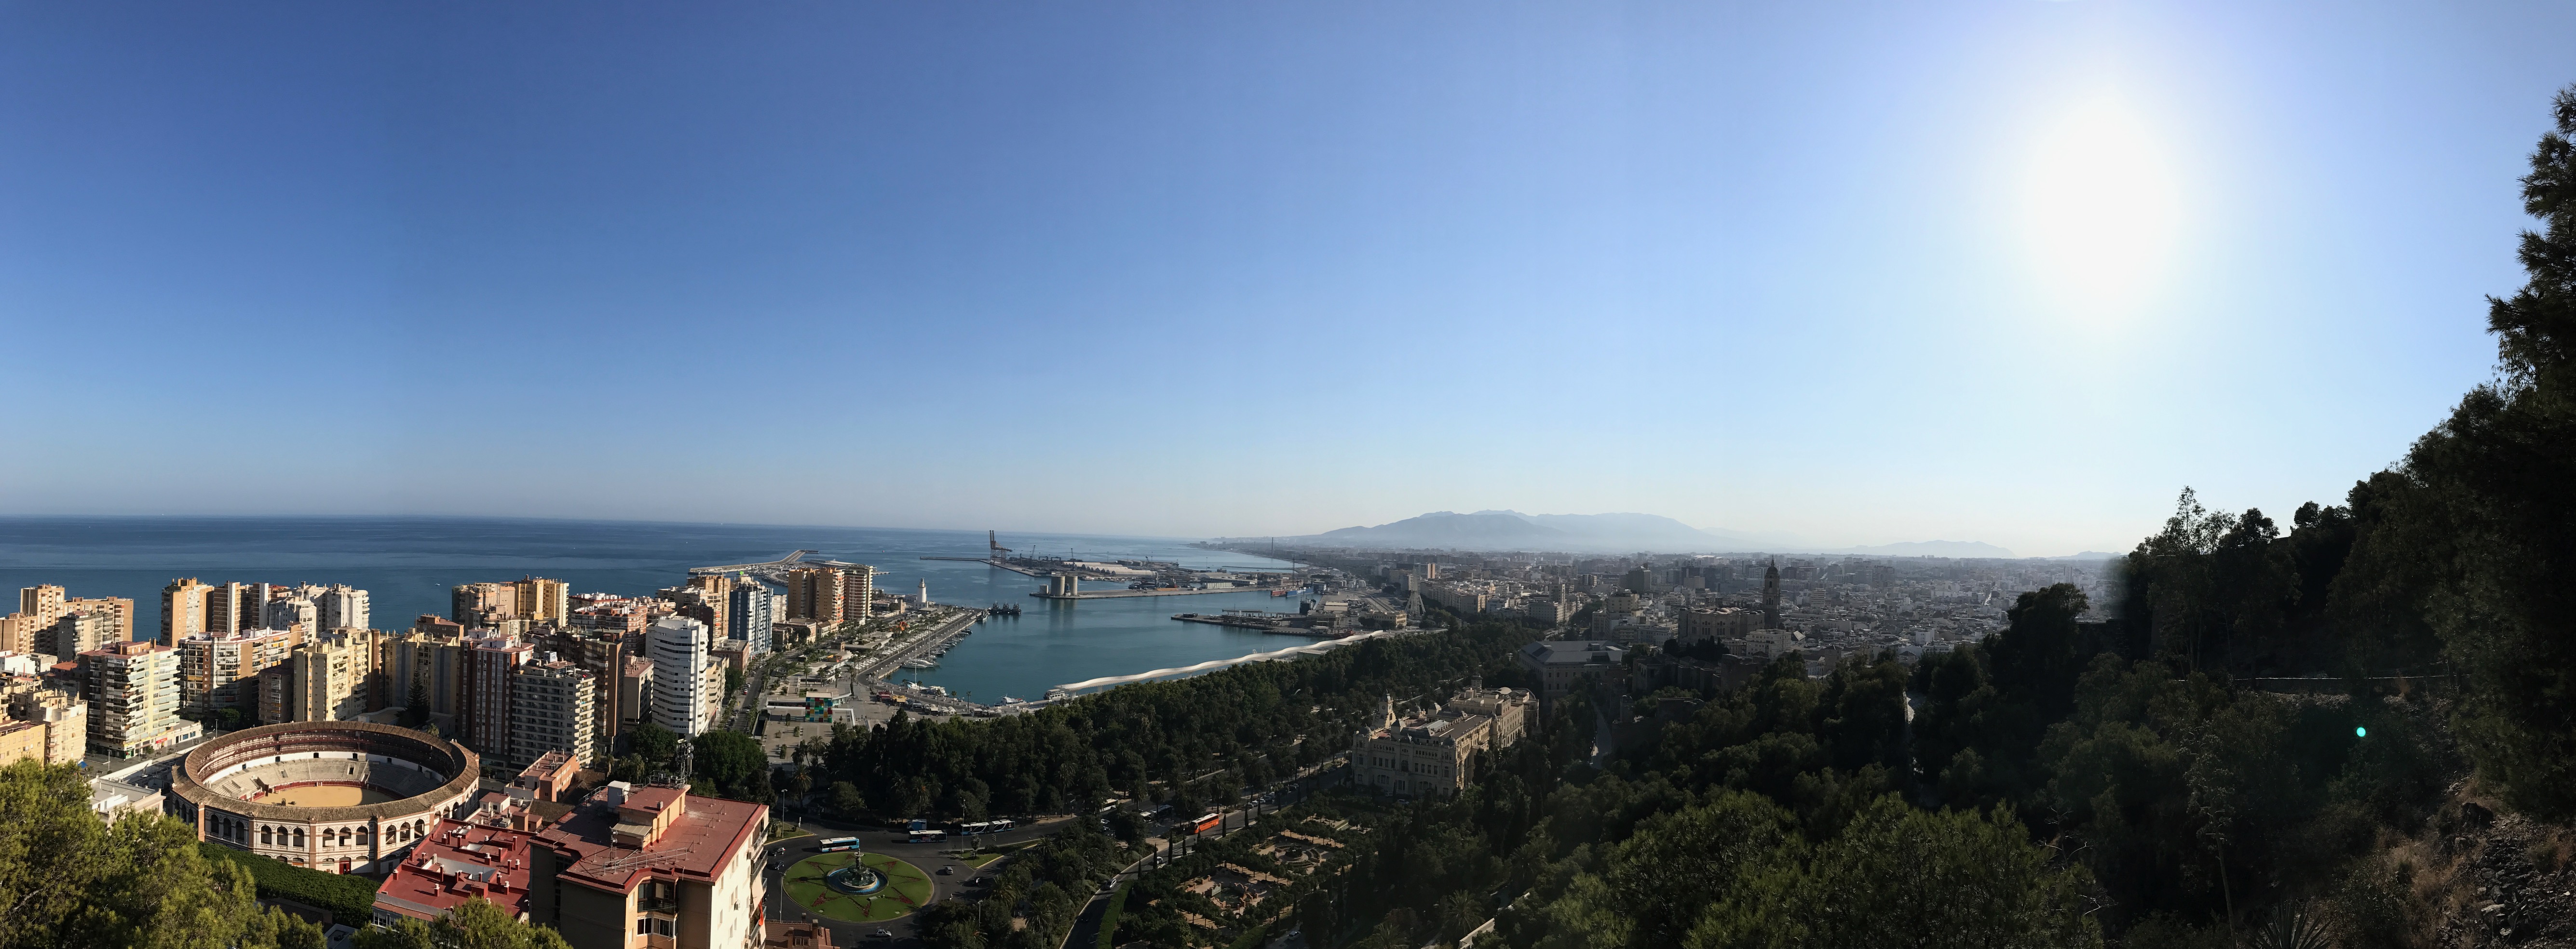 Panoramica de Malaga